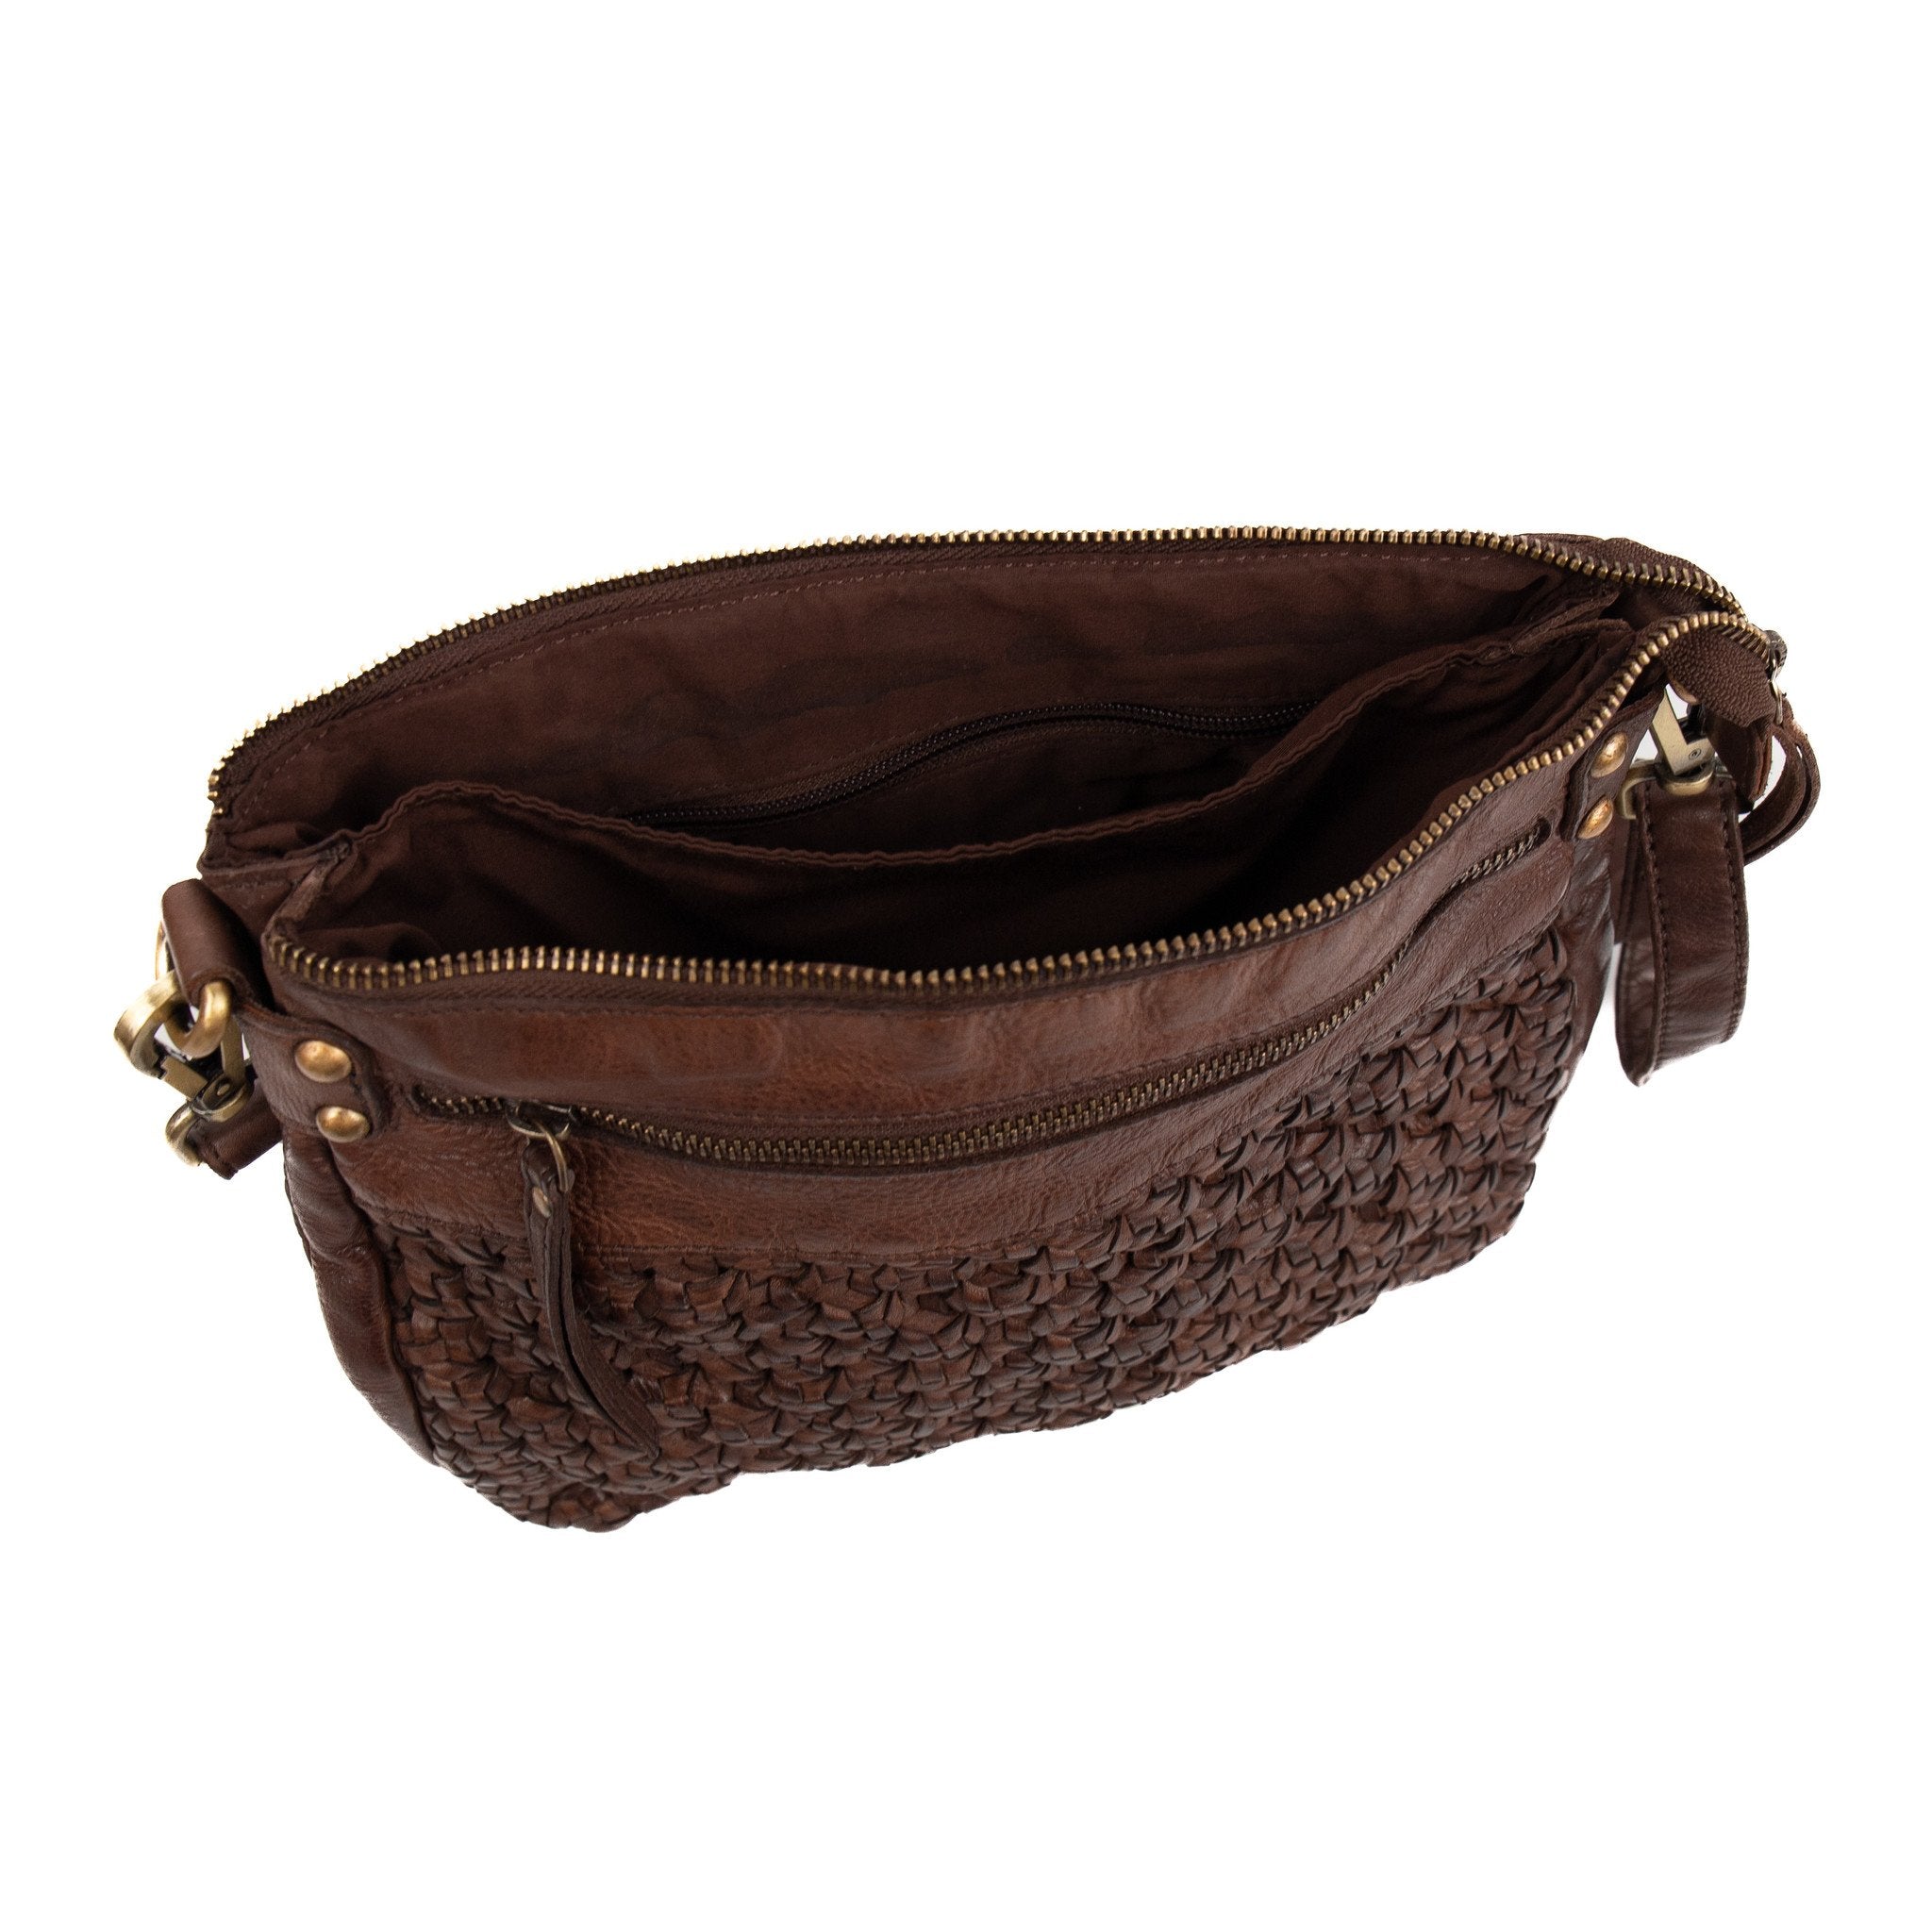 Braided shoulder bag 'Sita' dark brown - MJ 1762